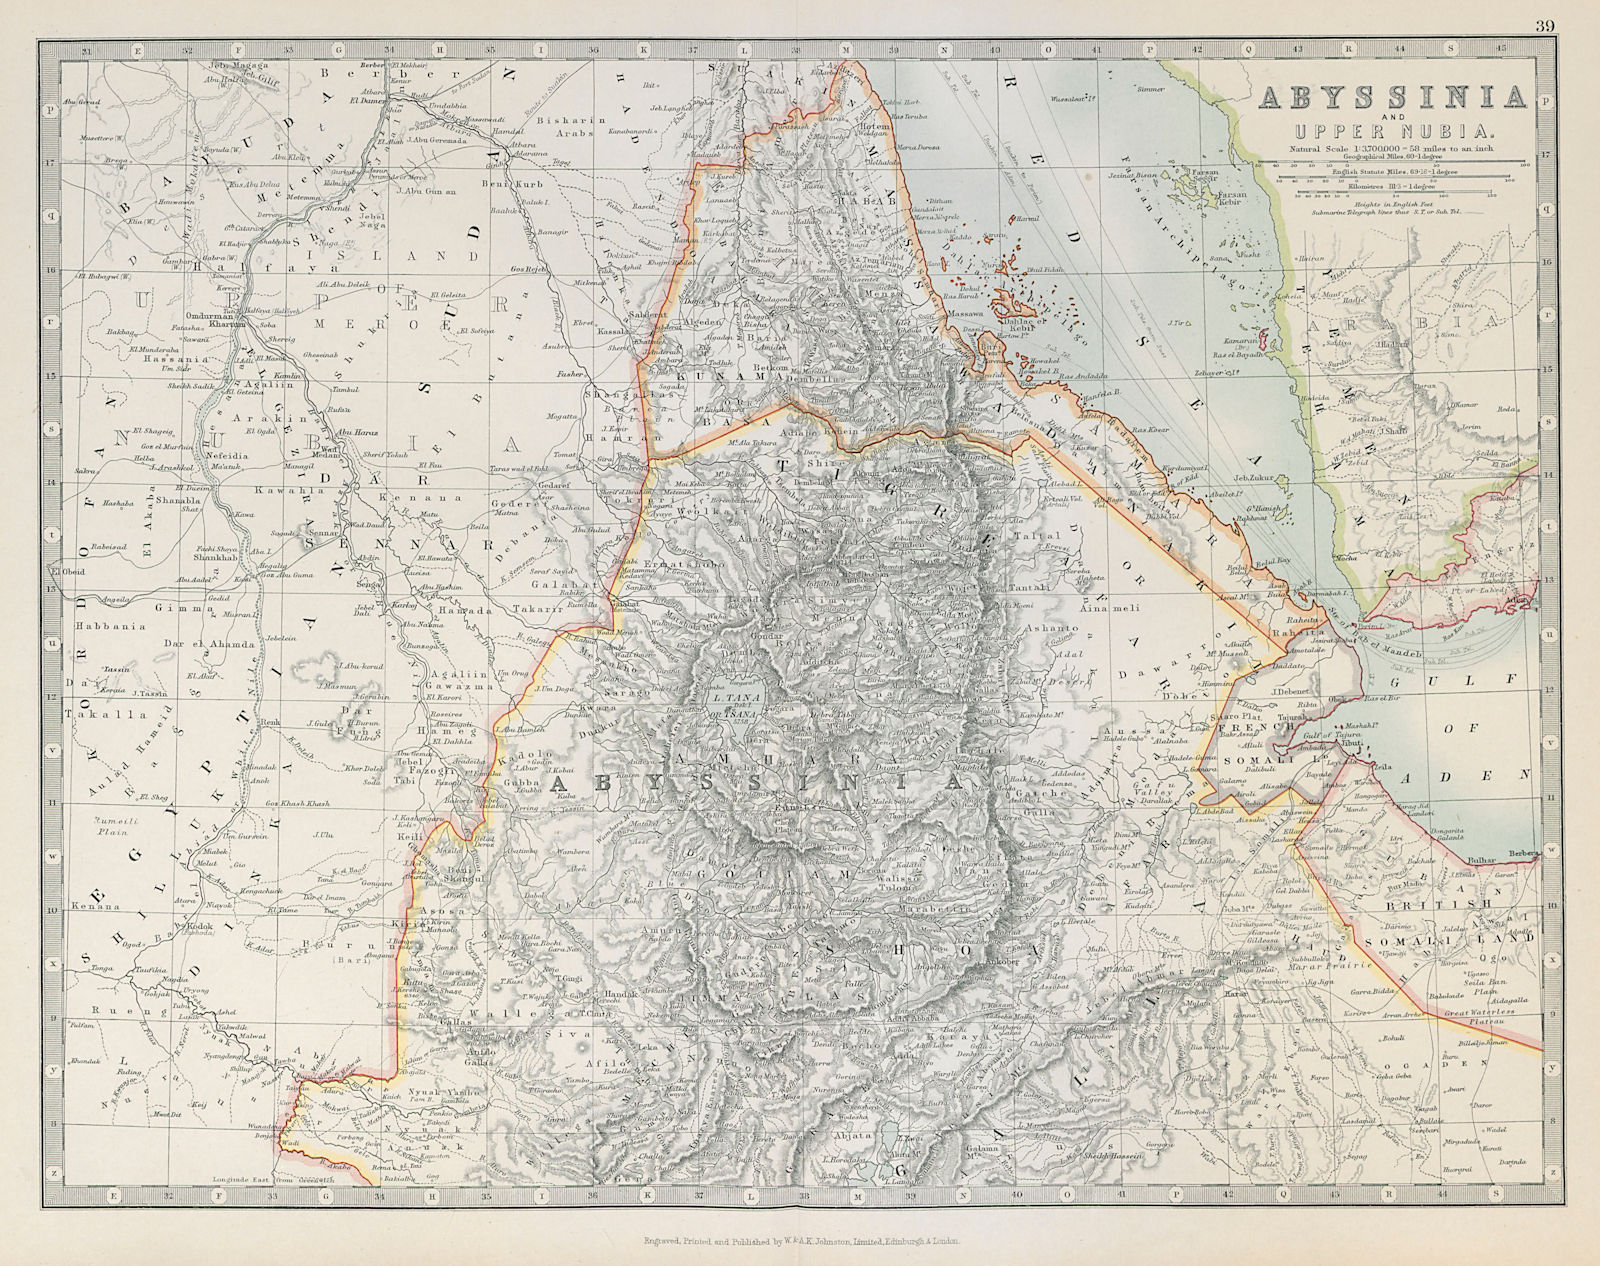 ABYSSINIA & UPPER NUBIA. Ethiopia Eritrea French Somaliland. JOHNSTON 1915 map